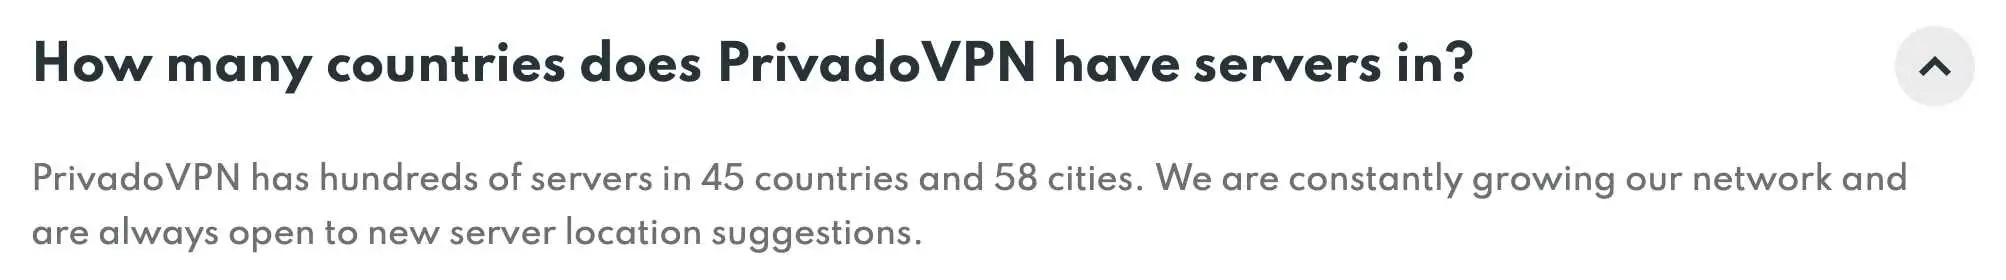 PrivadoVPN - Servers2